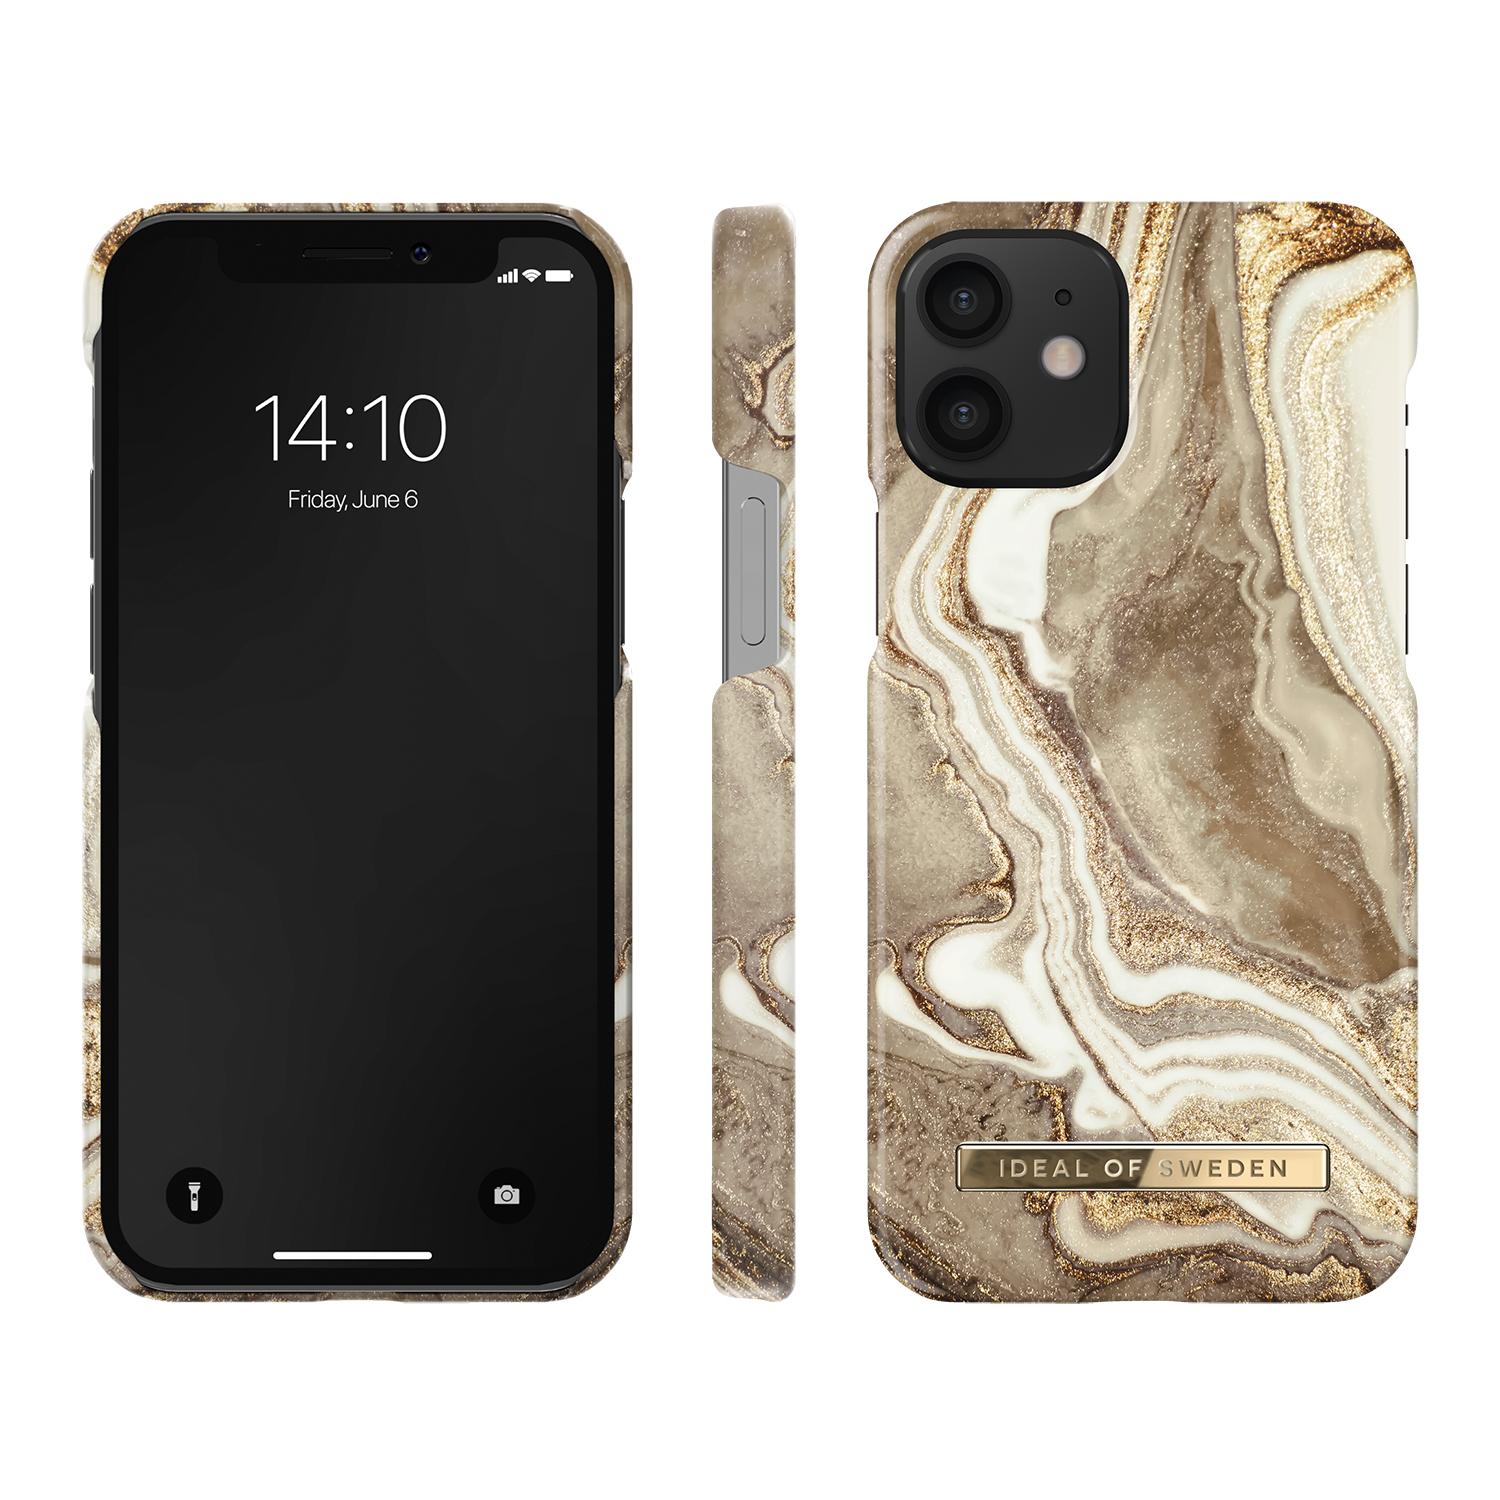 Funda Fashion Case iPhone 12 Mini Golden Sand Marble